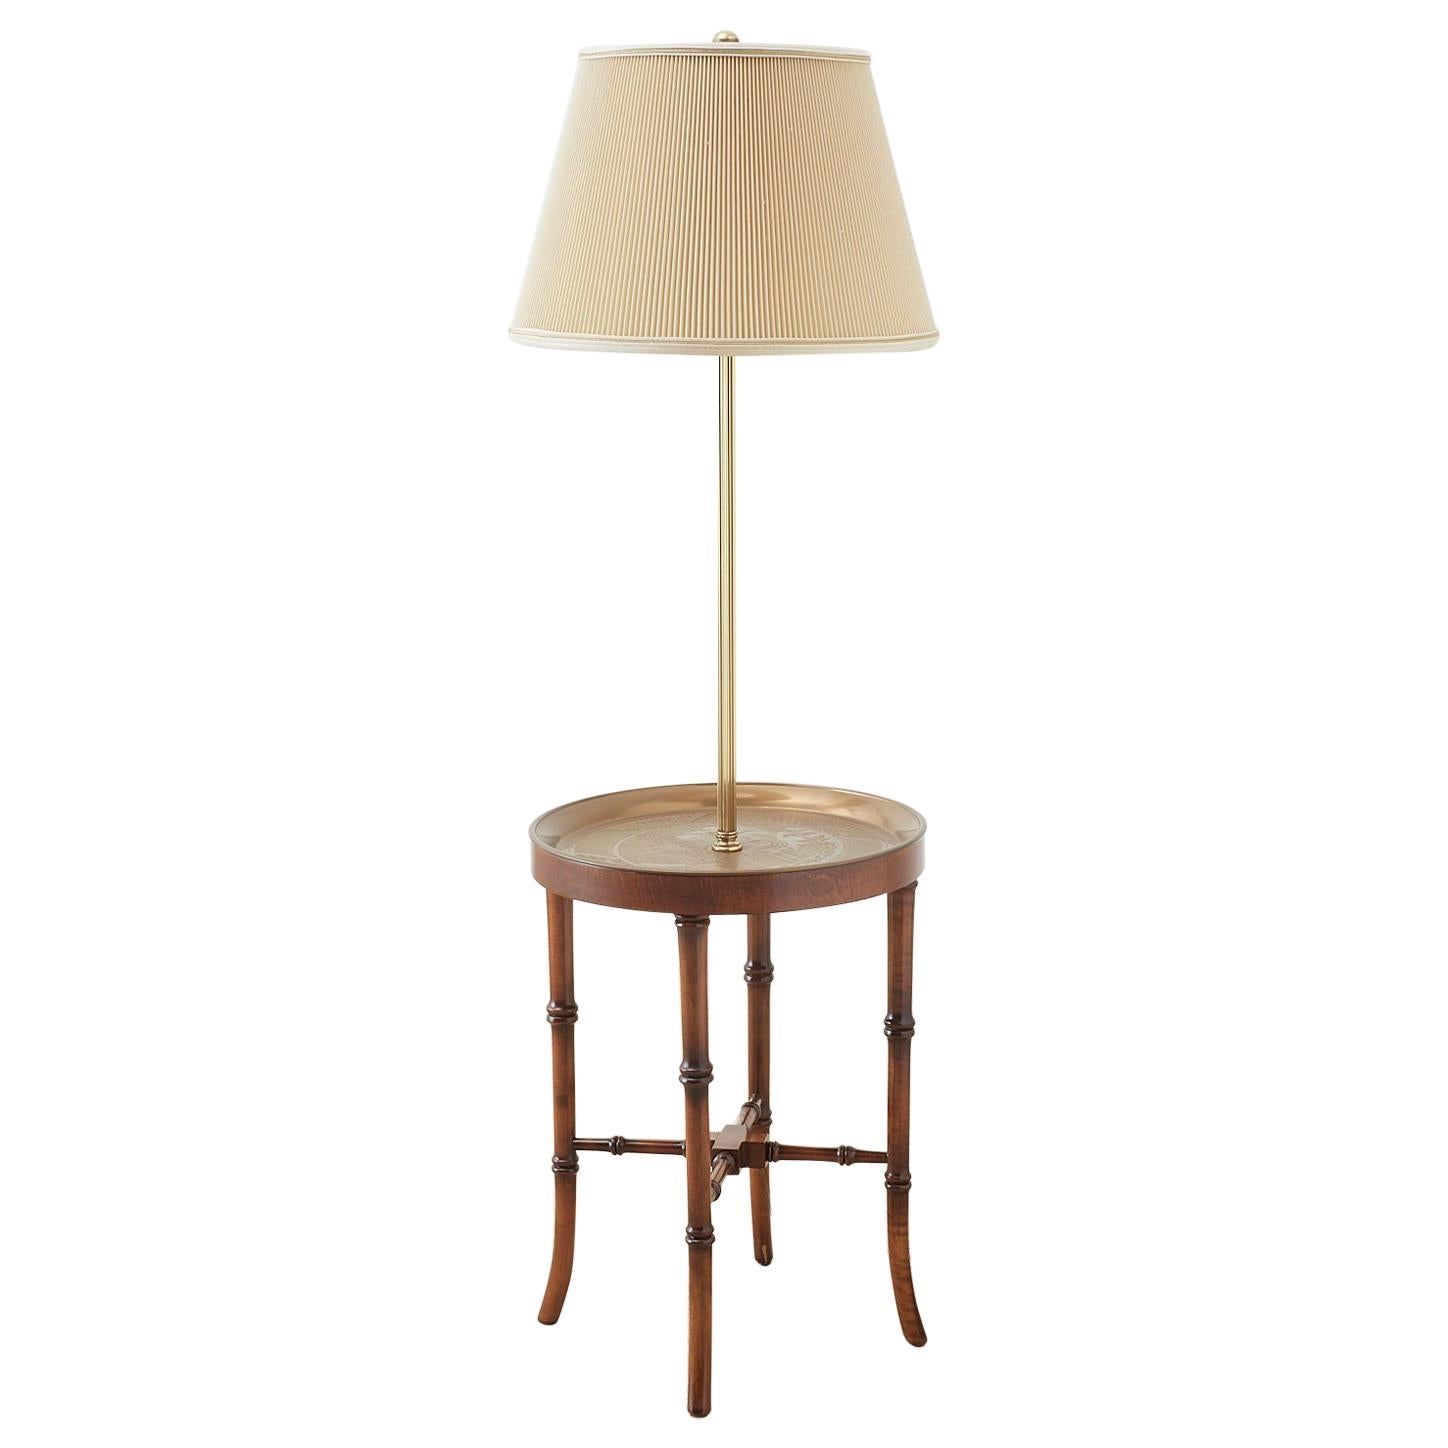 Midcentury Fredrick Cooper Faux Bamboo Floor Lamp Table